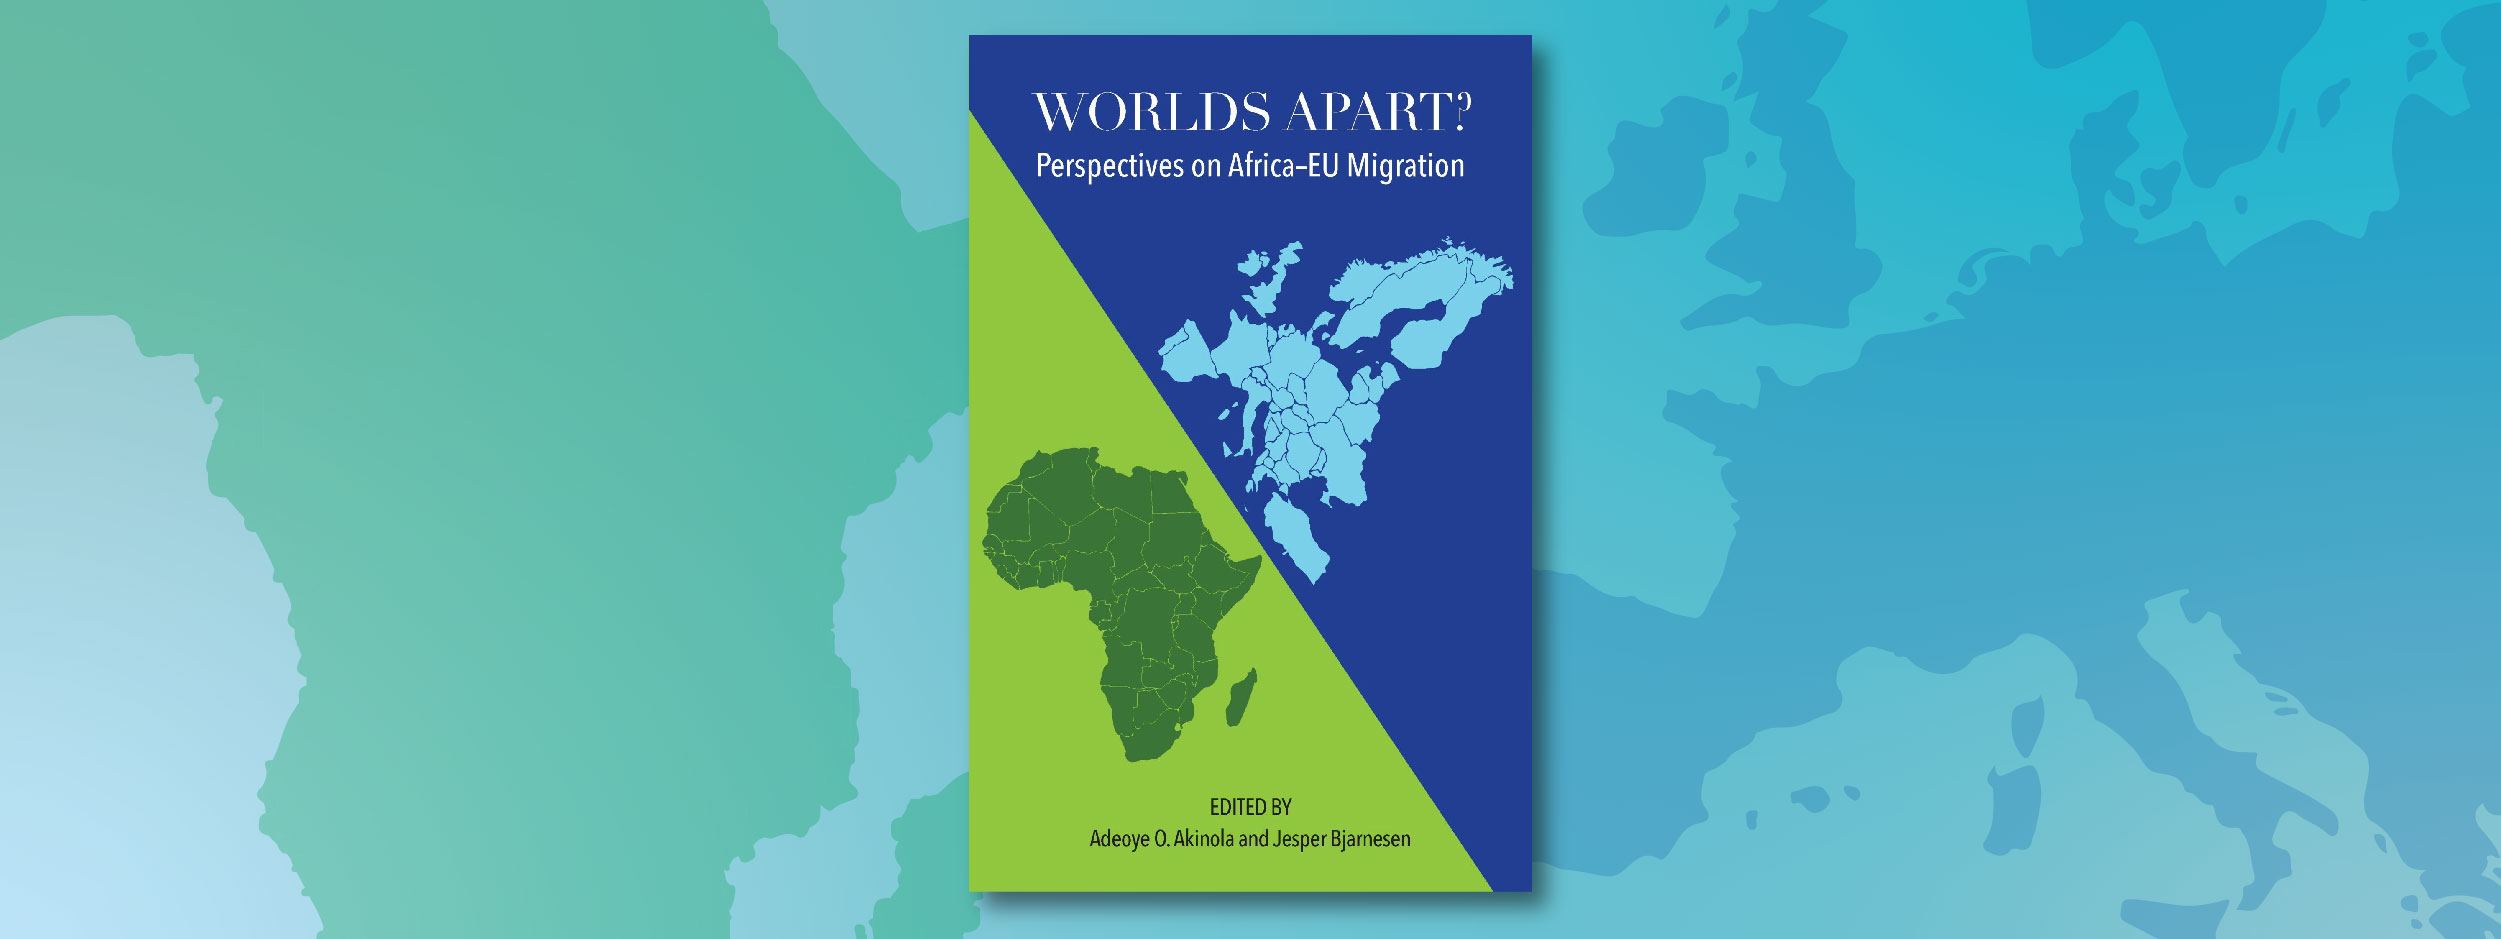 World’s Apart? Perspectives On Africa-EU Migration webinar